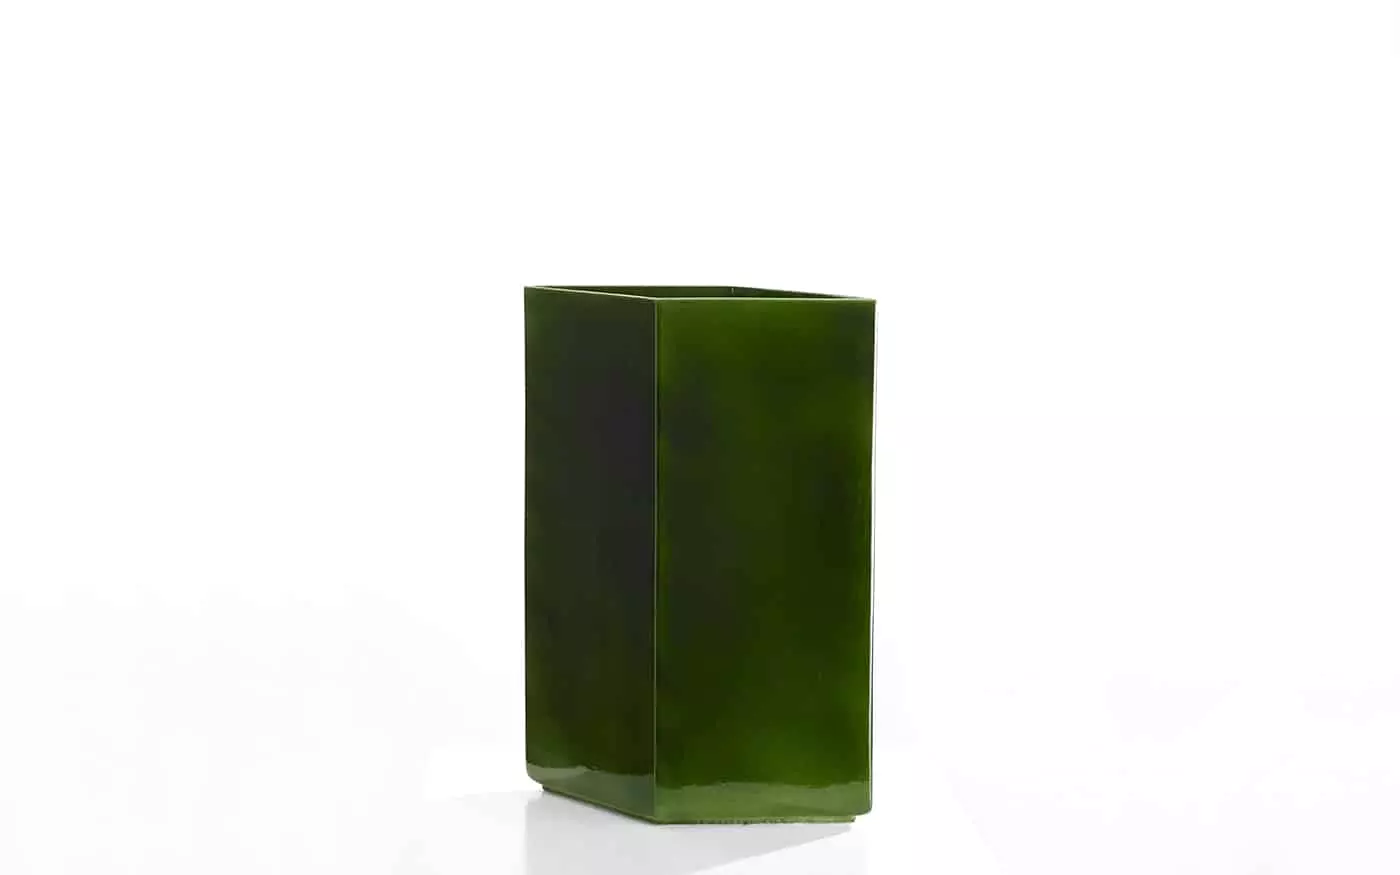 Vase Losange 67 green - Ronan and Erwan Bouroullec - PAD London 2023.